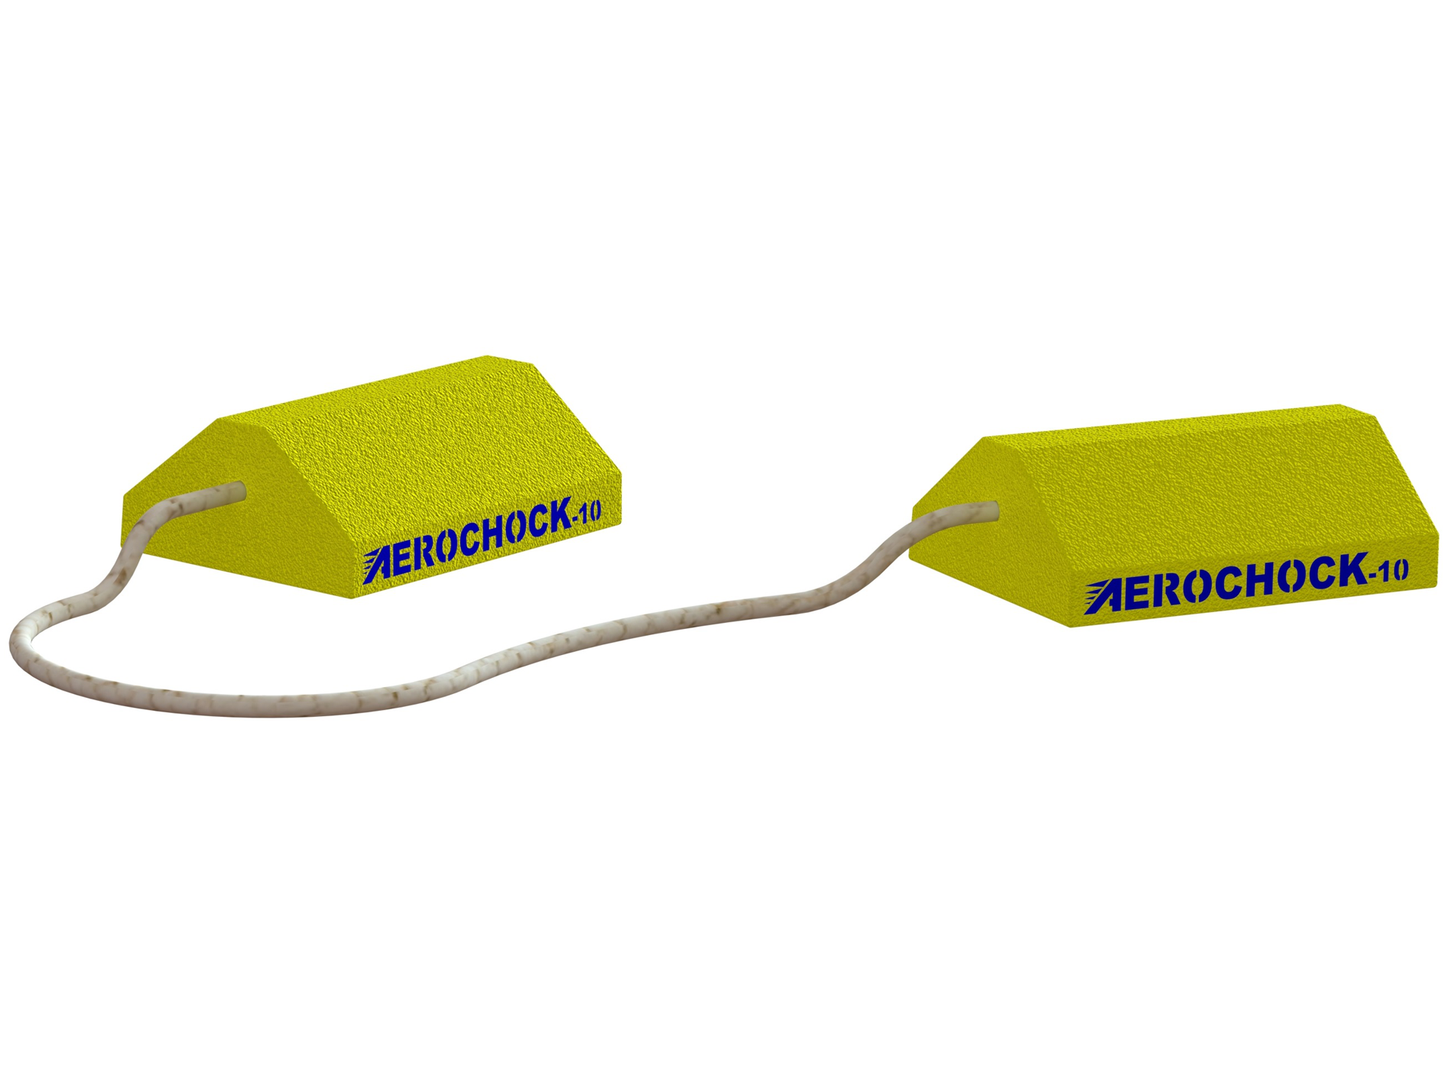 AeroChock™ size 10